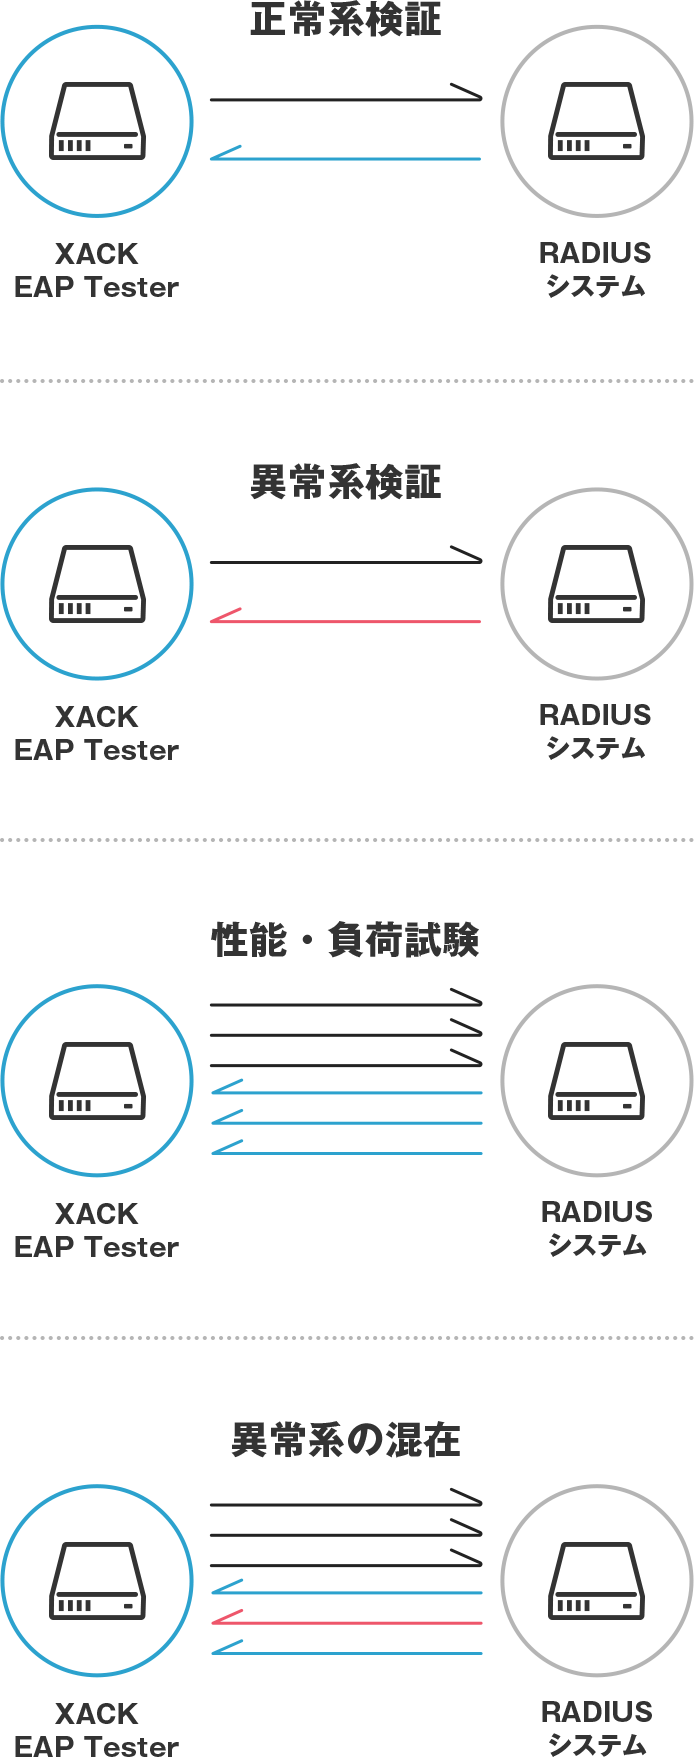 XACK EAP Testerを用いた、正常系検証・異常系検証・性能・負荷試験・異常系の混在のイメージ画像